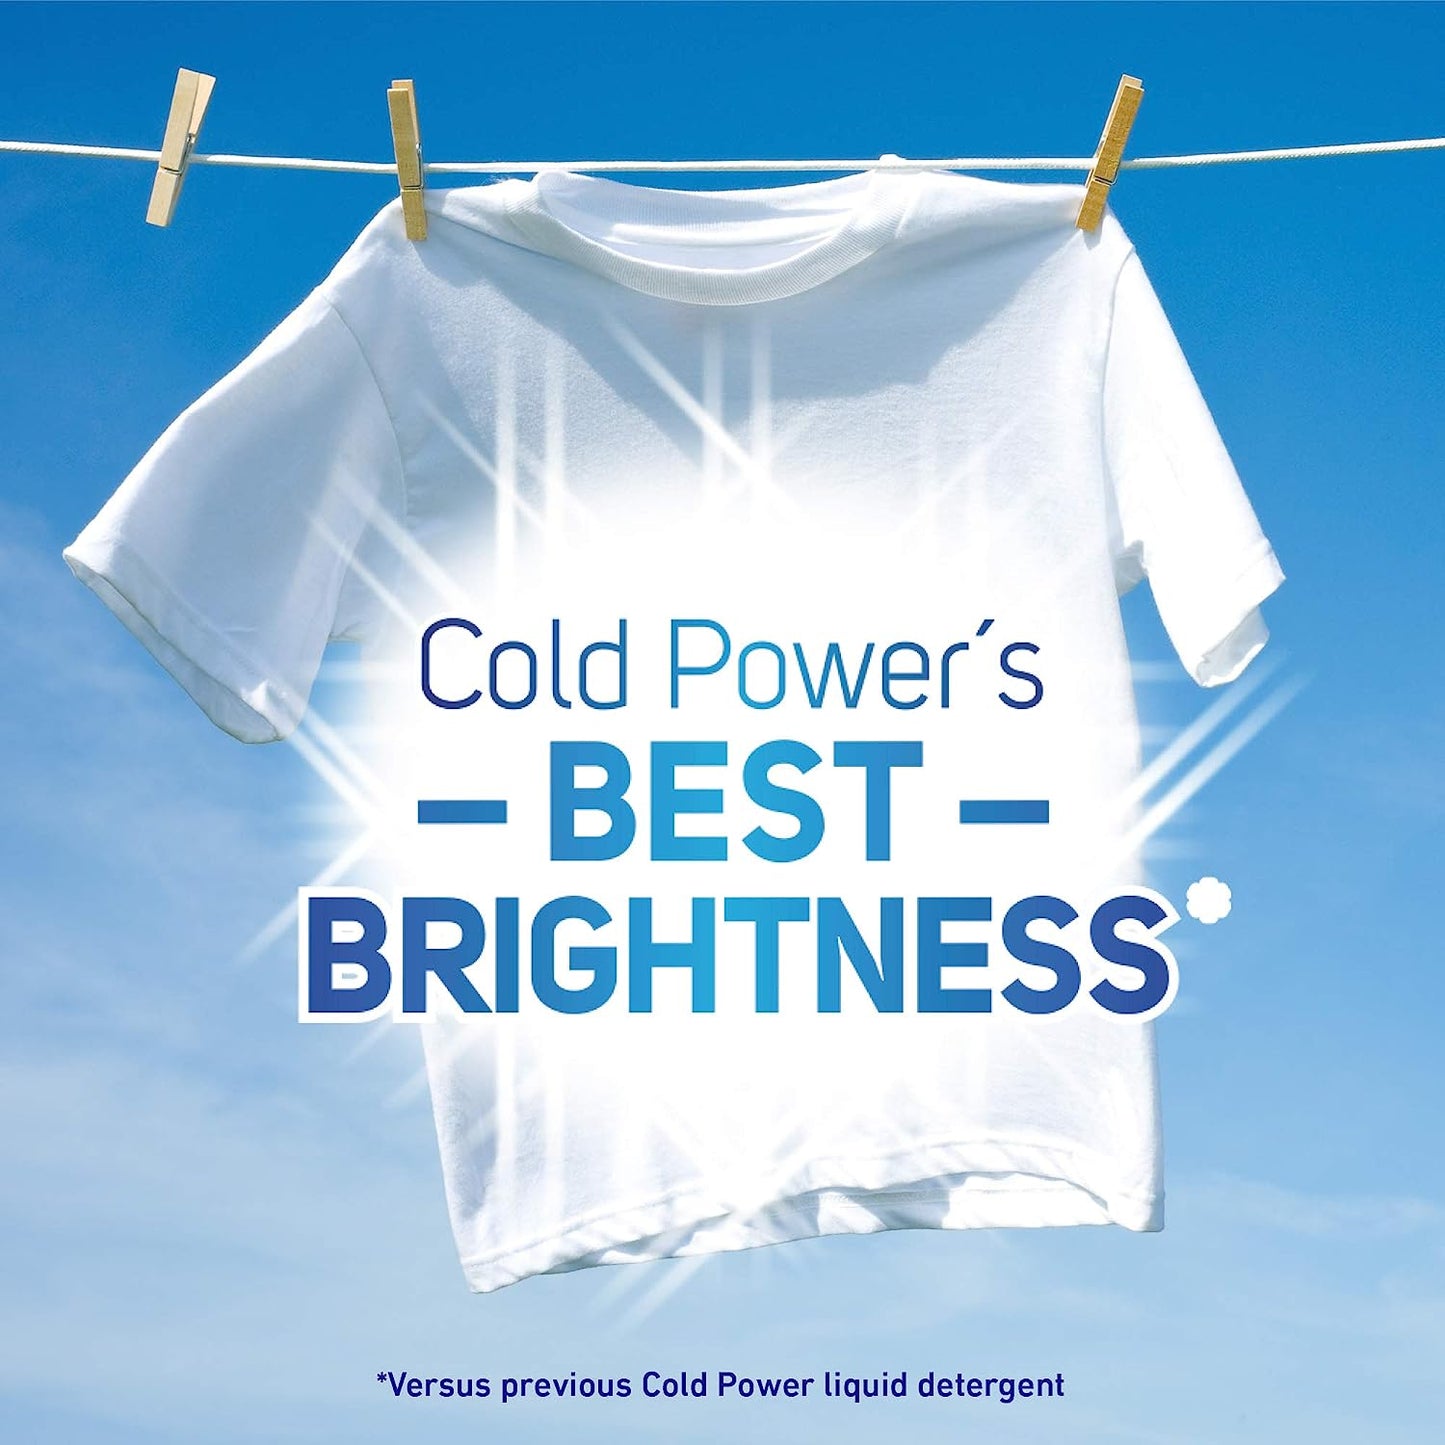 Cold Power Advanced Clean, Powder Laundry Detergent, 4kg